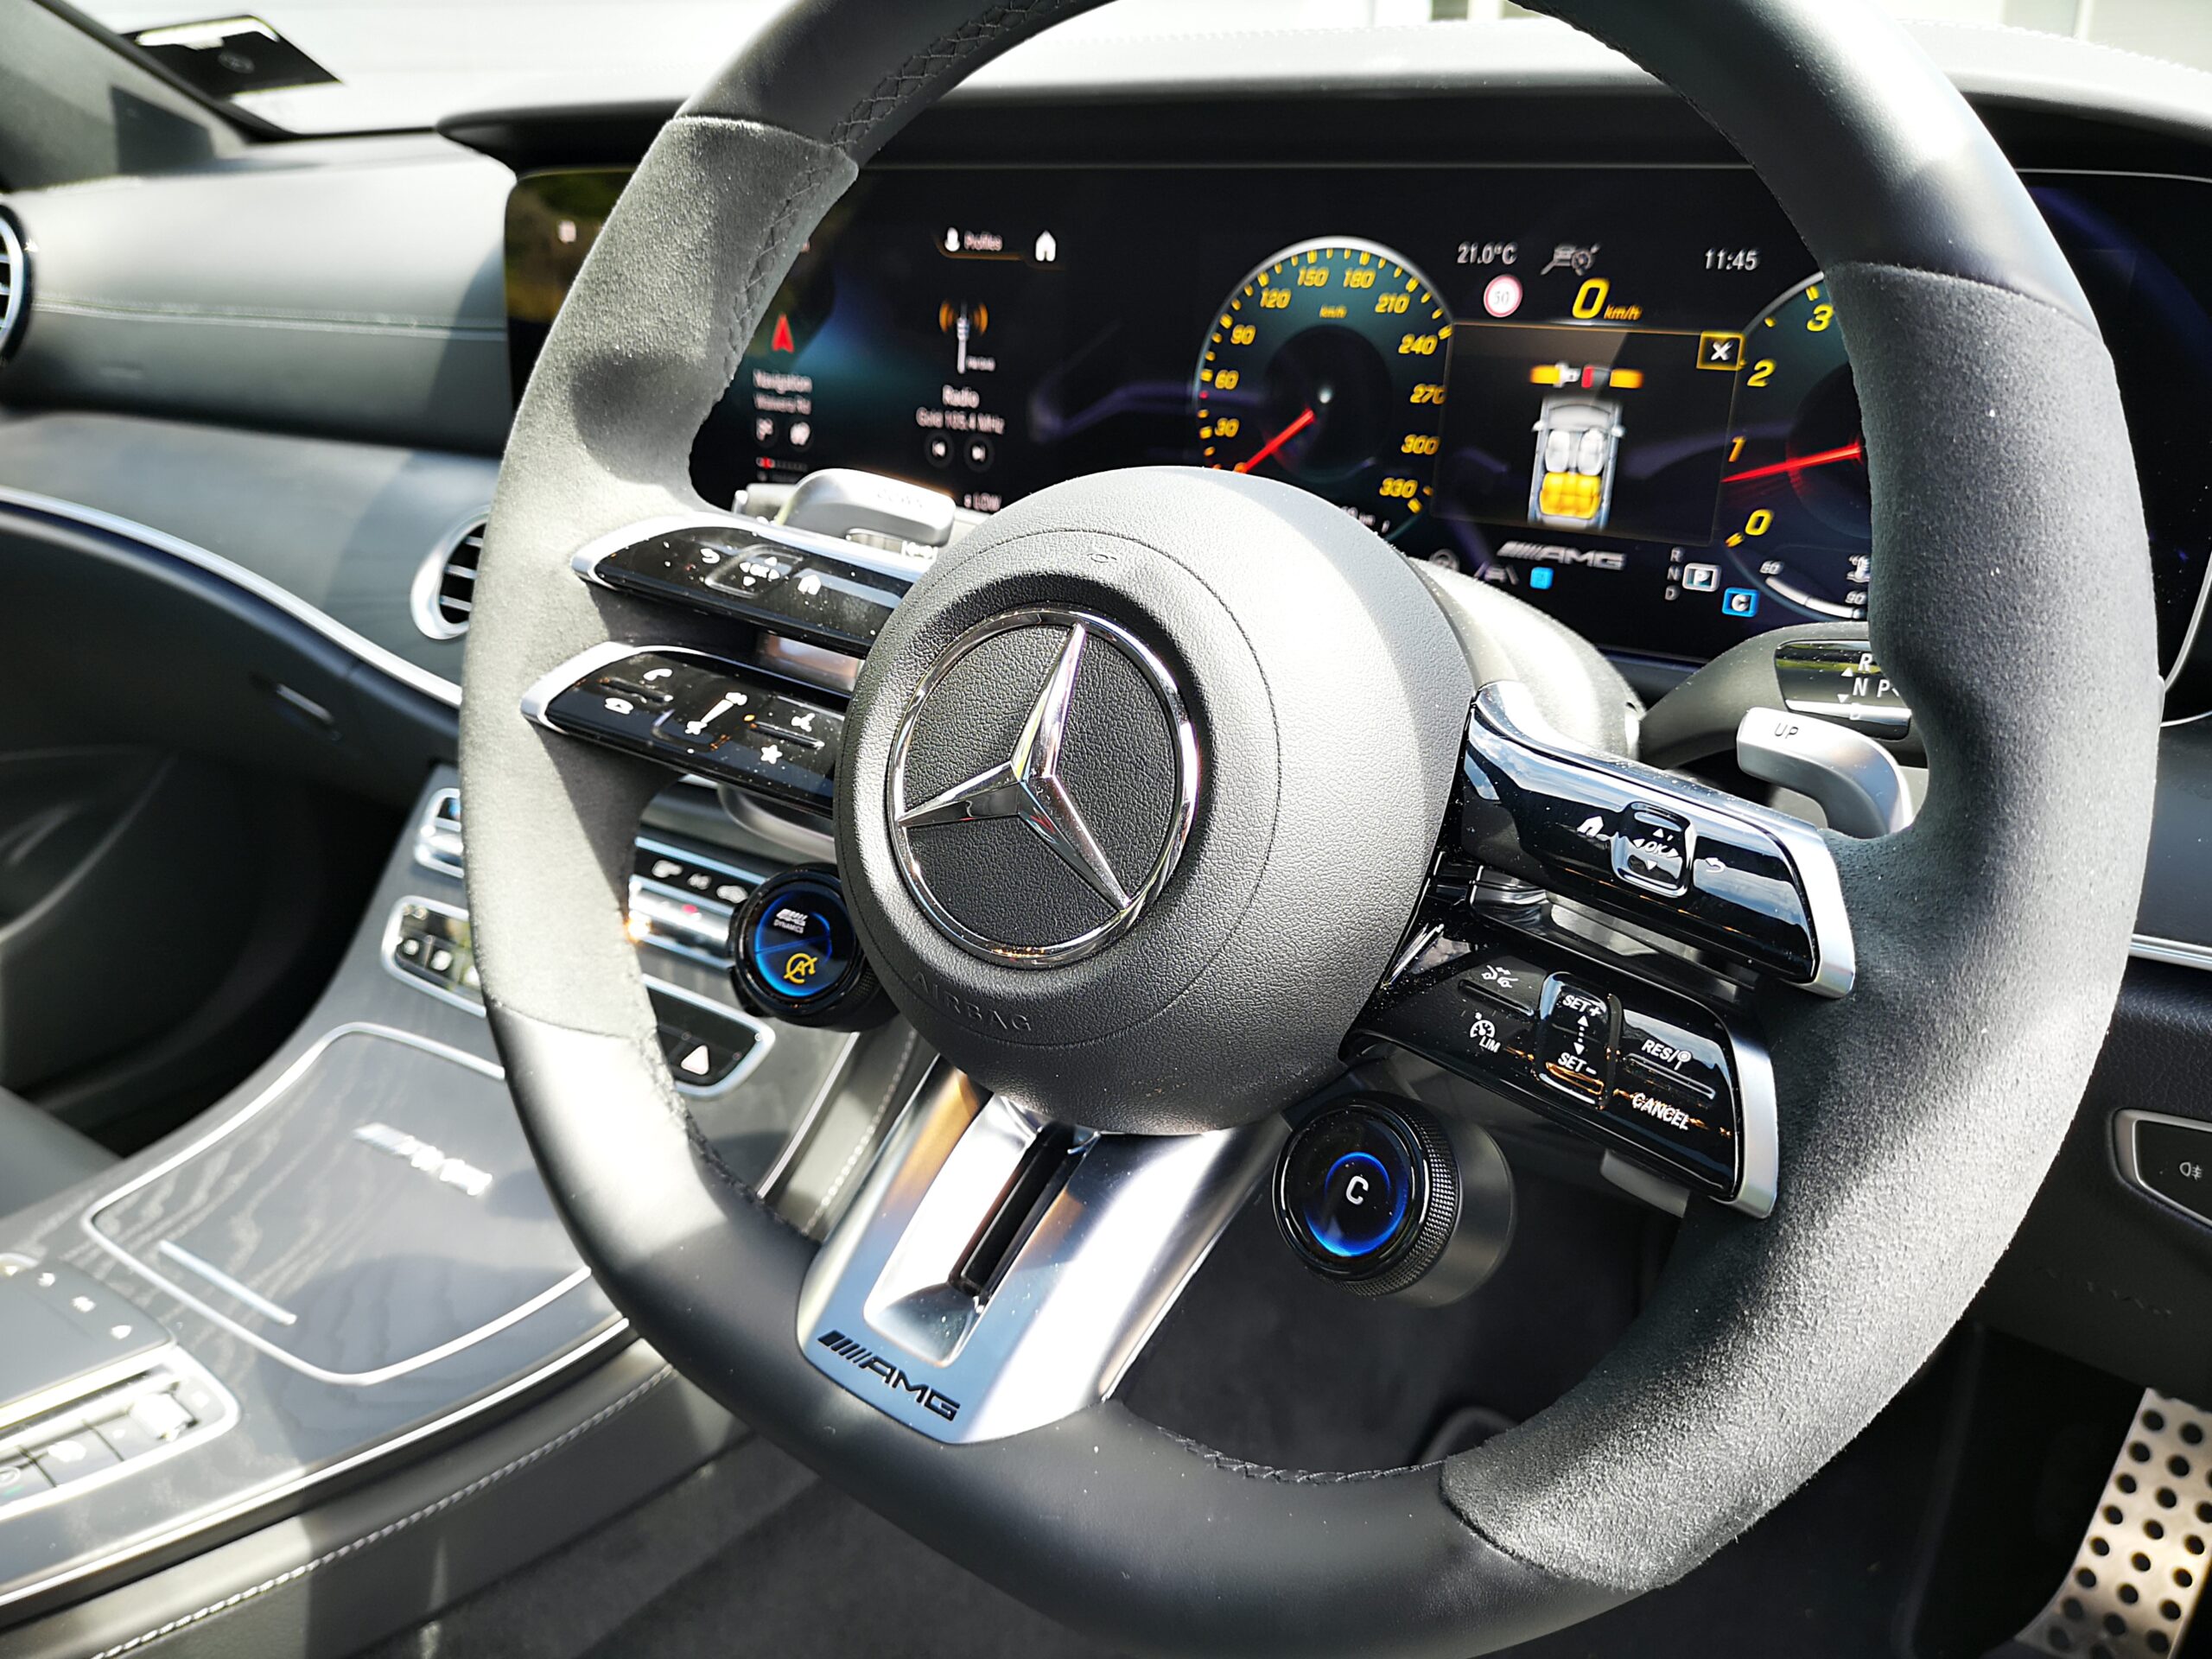 2021 Mercedes-AMG E 63 S  review NZ